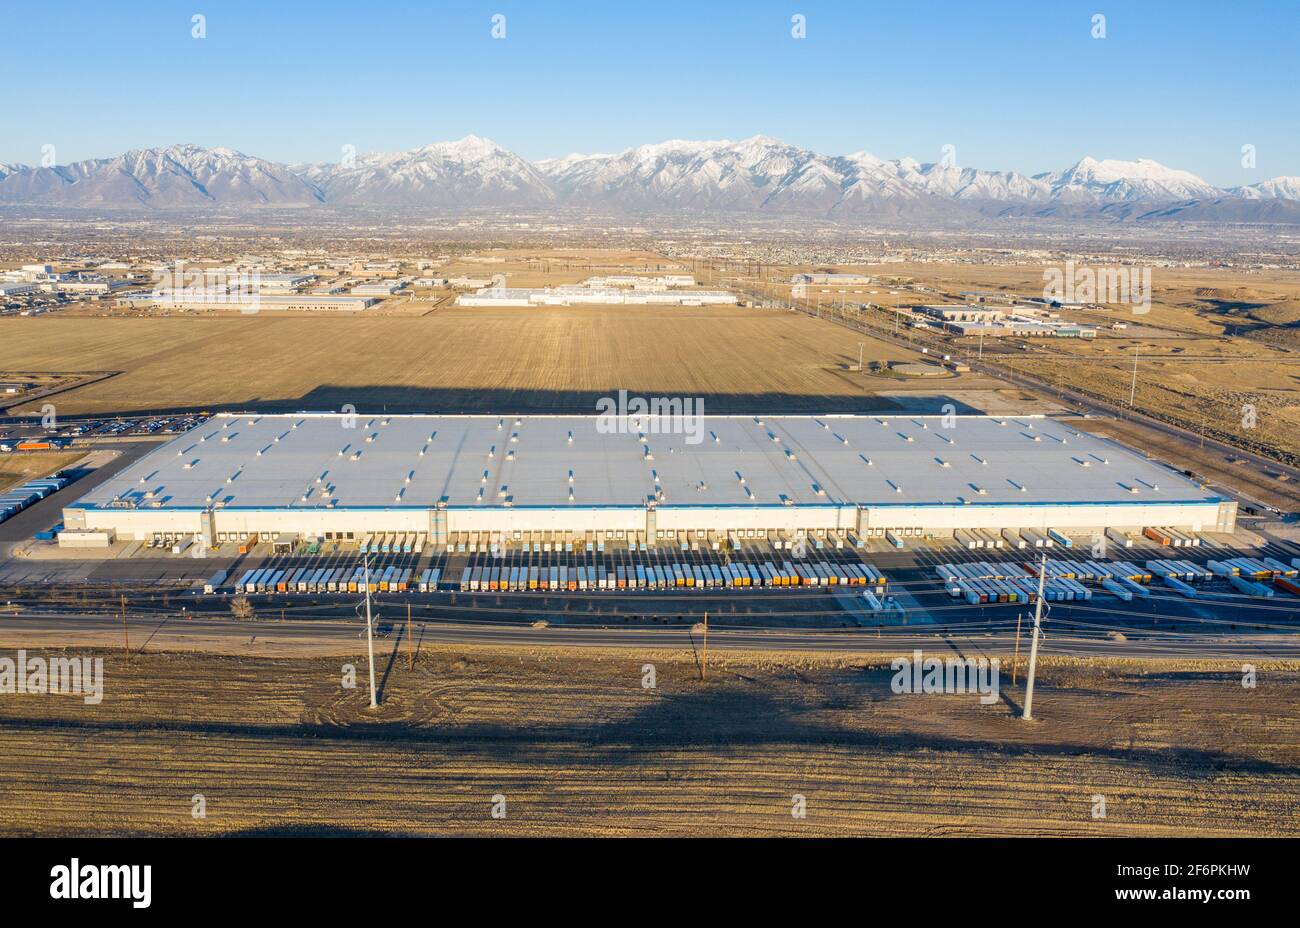 Amazon Fulfillment Center, Salt Lake City, Utah, USA Stockfoto